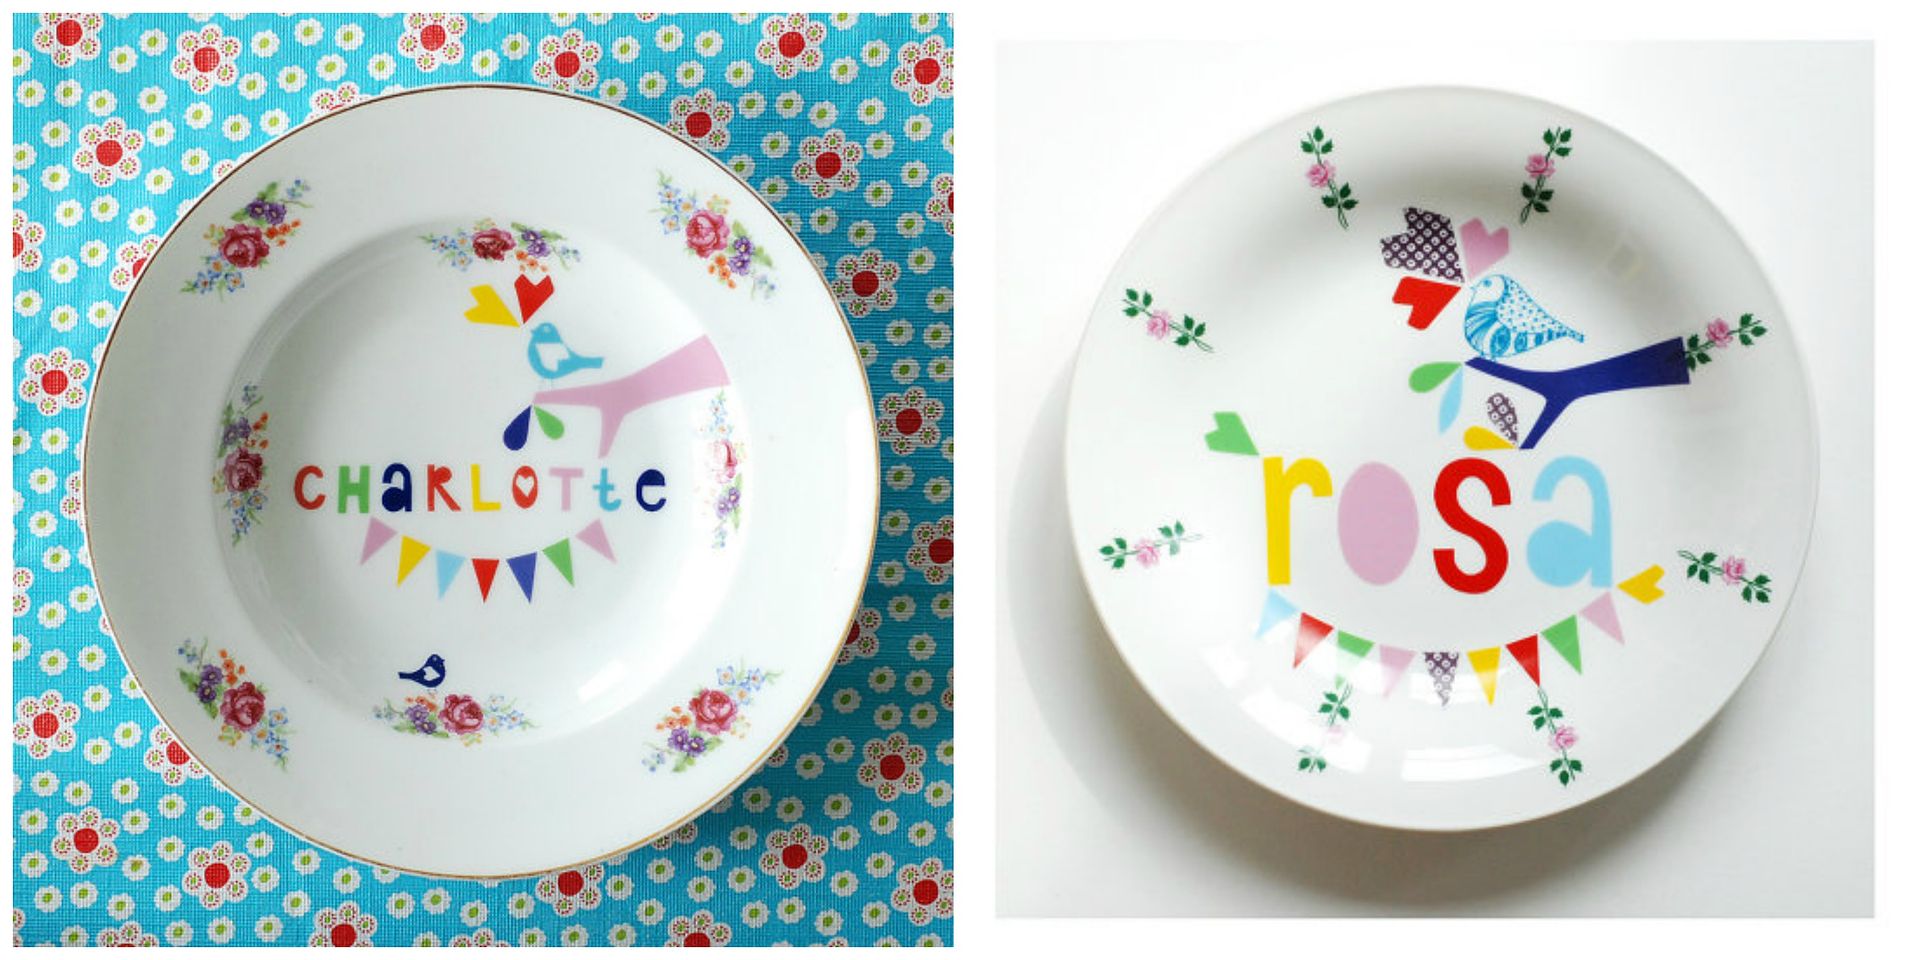 Ninainvorm personalized vintage plates | Cool Mom Picks